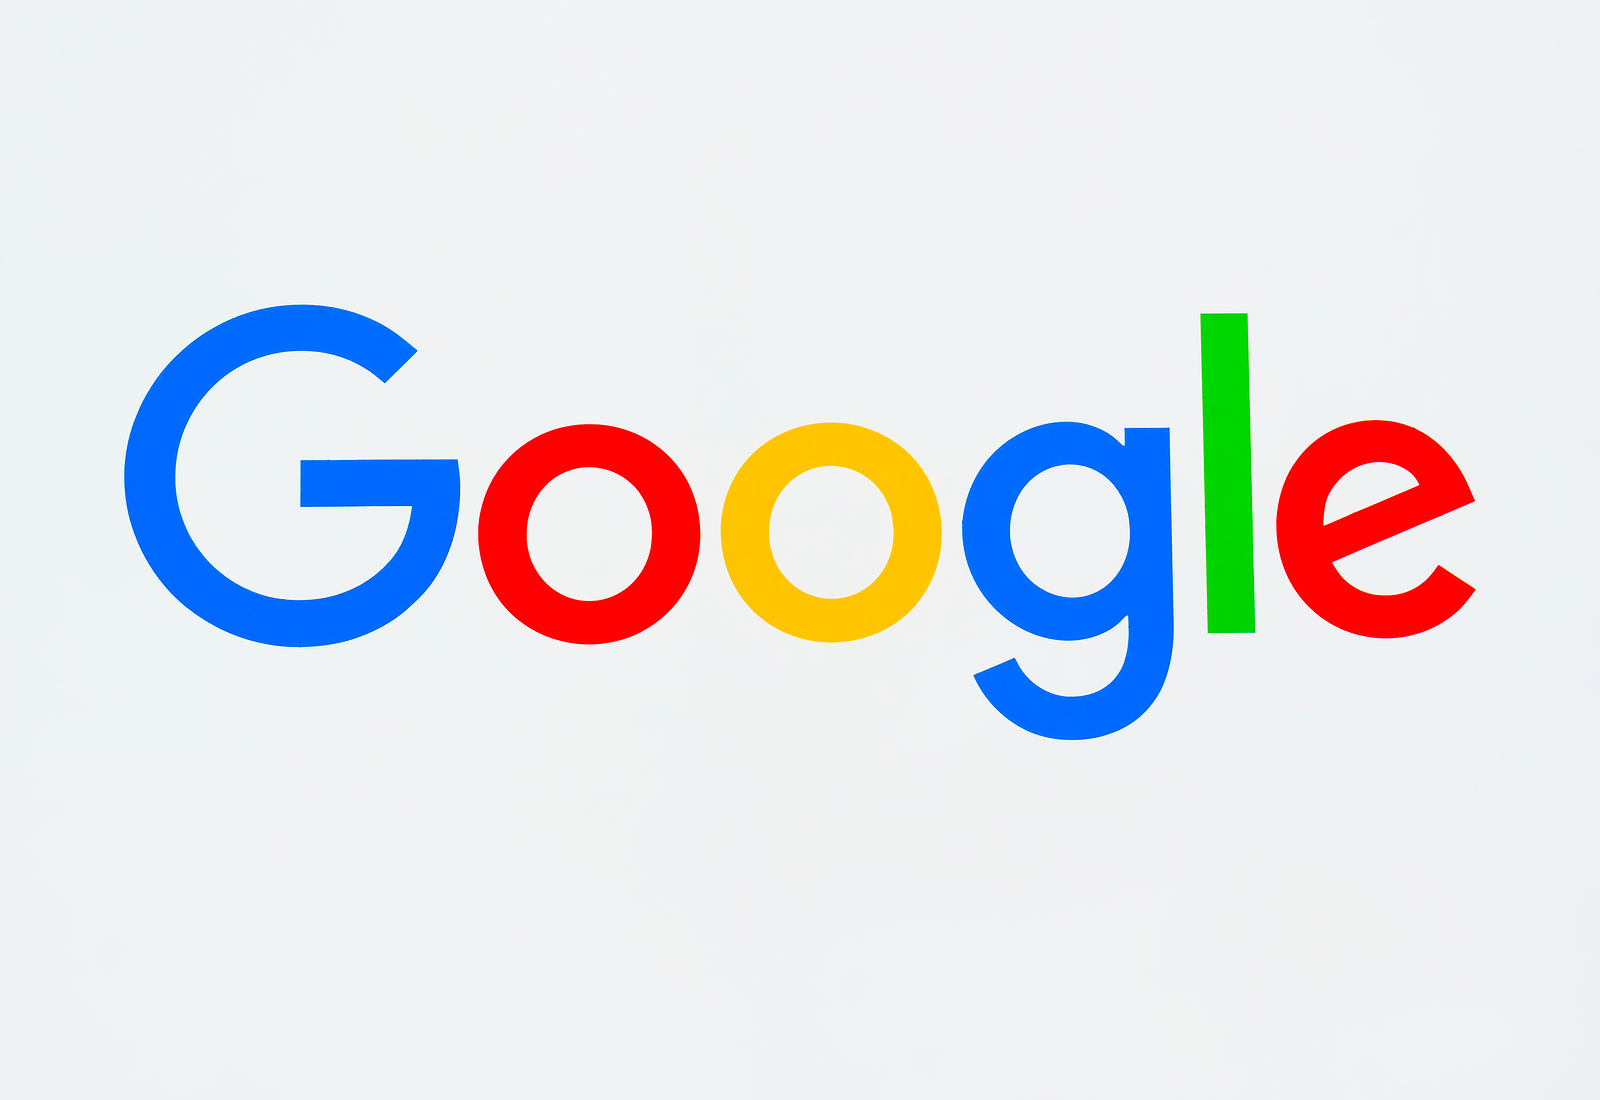 Что будет делать гугл. Гугл на белом фоне. Гугл картинки. Нарисовать гугл. Картинки логотипа гугл.